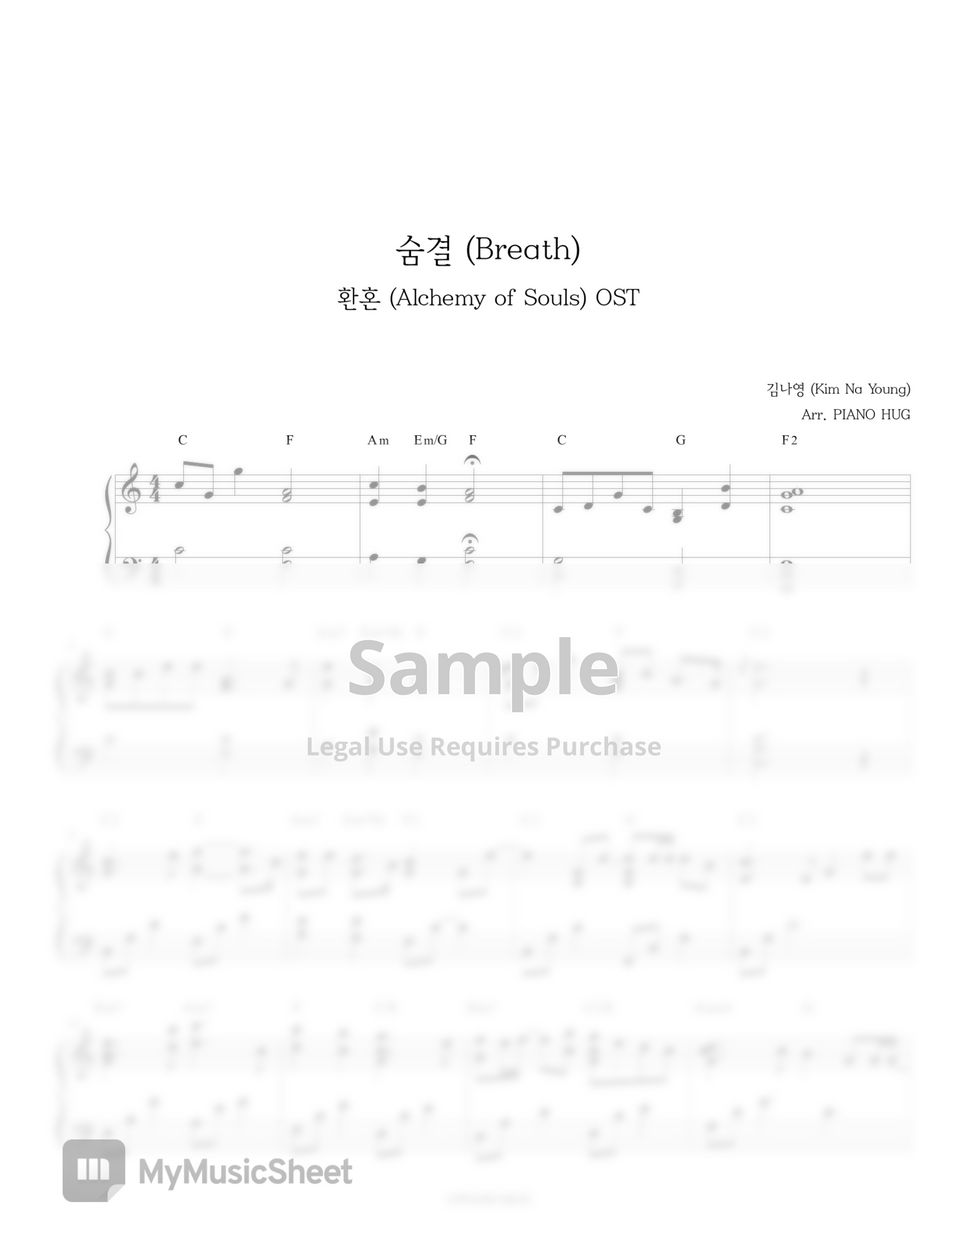 Alchemy of Souls (숨결) OST - Kim Na Young (김나영) - Breath (숨결) by Piano Hug